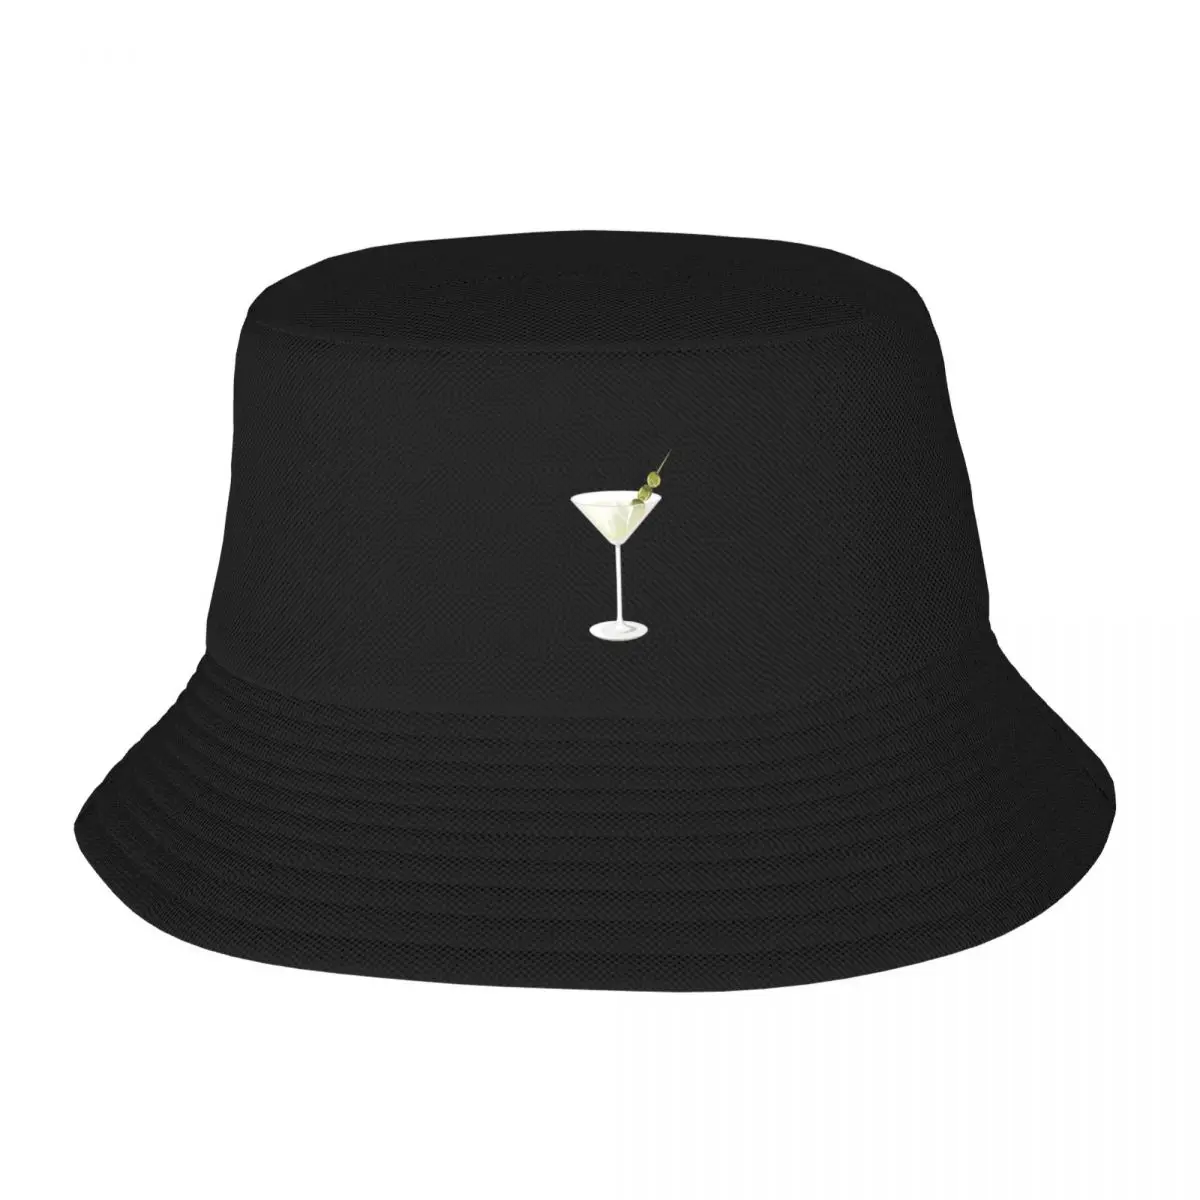 https://ae01.alicdn.com/kf/S5ec9a20ab31141e2a44194e9e96c7704W/Dry-Martini-Cocktail-Bucket-Hat-Golf-Hat-derby-hat-Military-Cap-Man-Hats-For-Men-Women.jpg